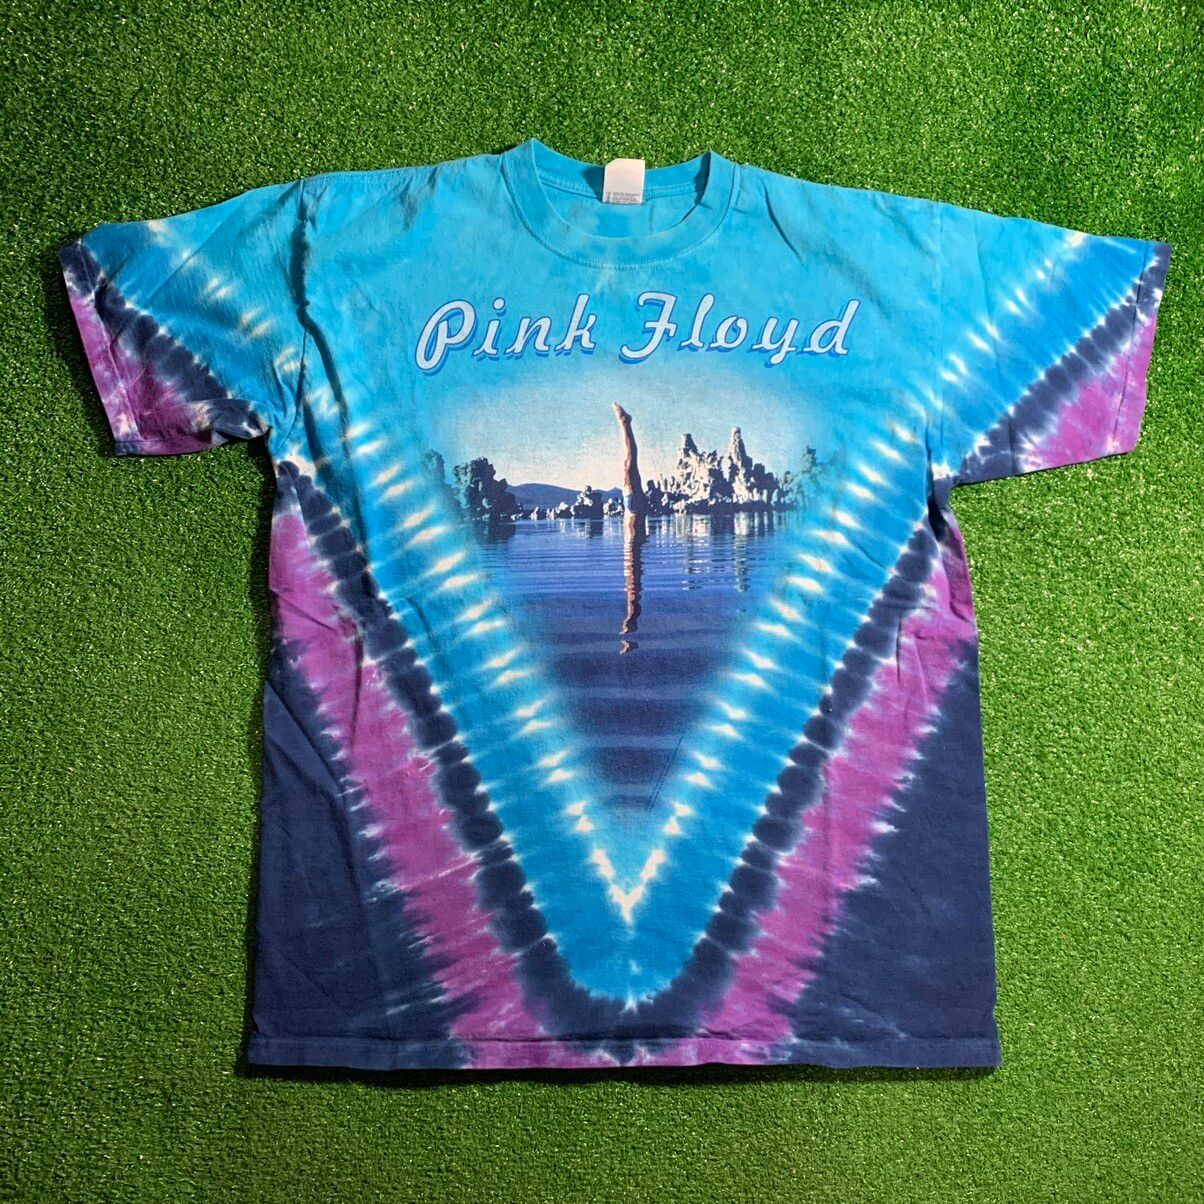 Vintage Vintage 2002 Pink Floyd Wish You Were Here Tie Dye Shirt L Size US L / EU 52-54 / 3 - 1 Preview